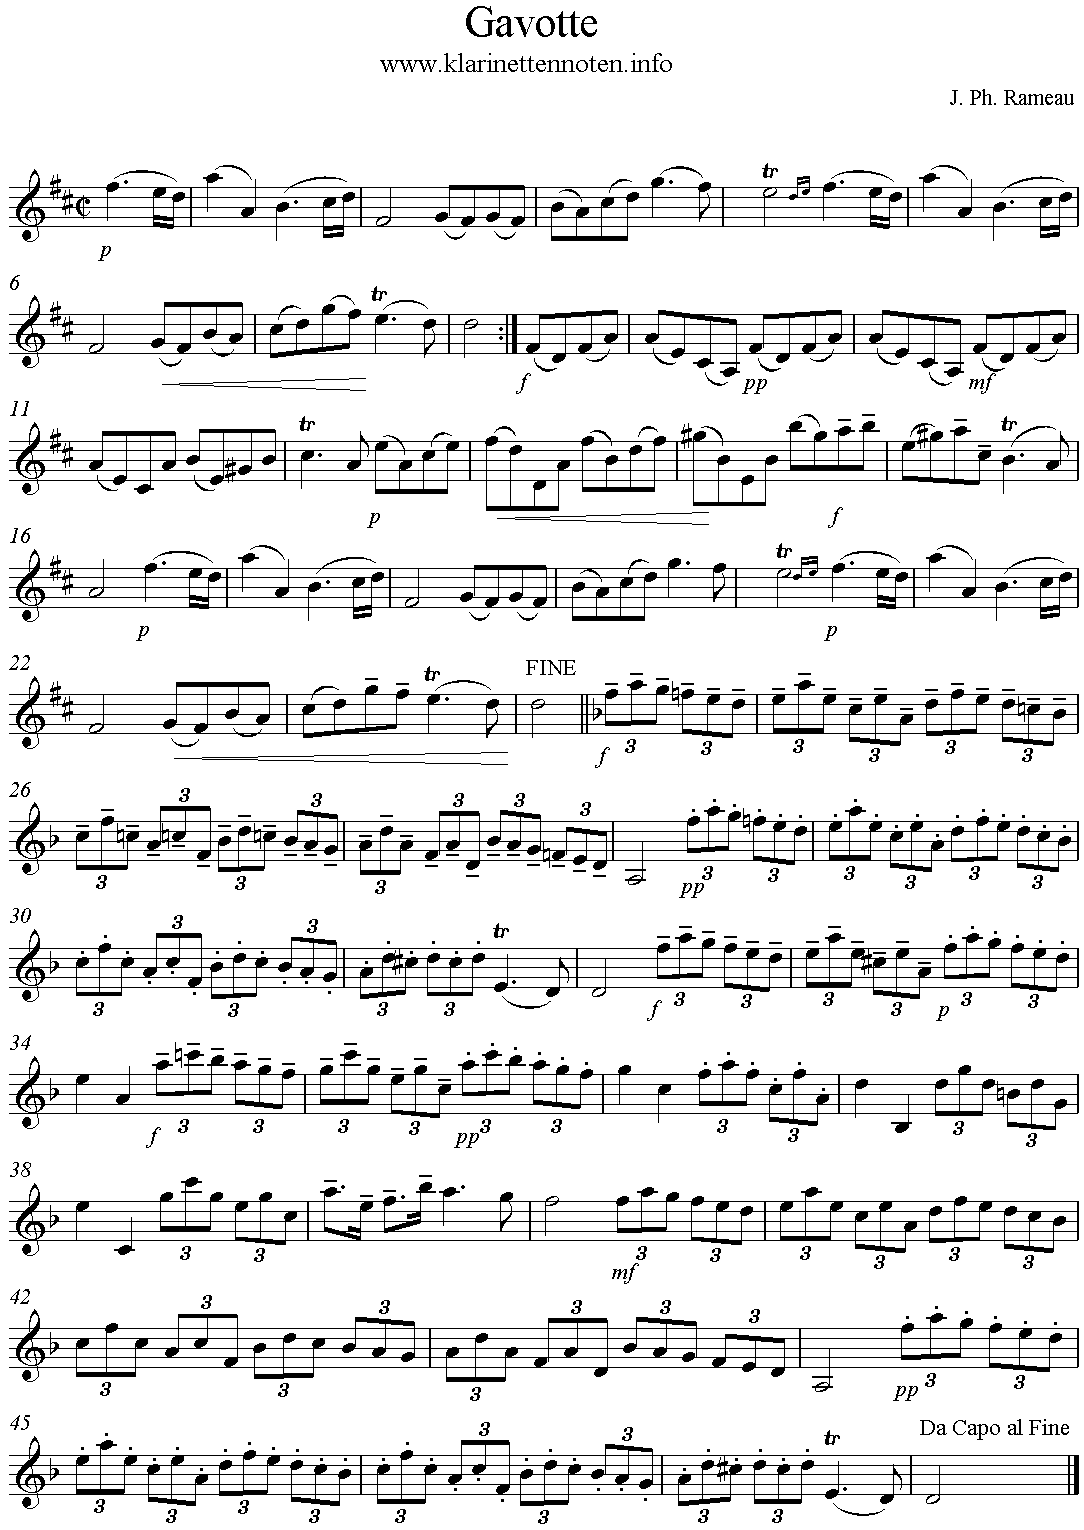 Gavotte - Rameau - for Clarinet, Klarinette